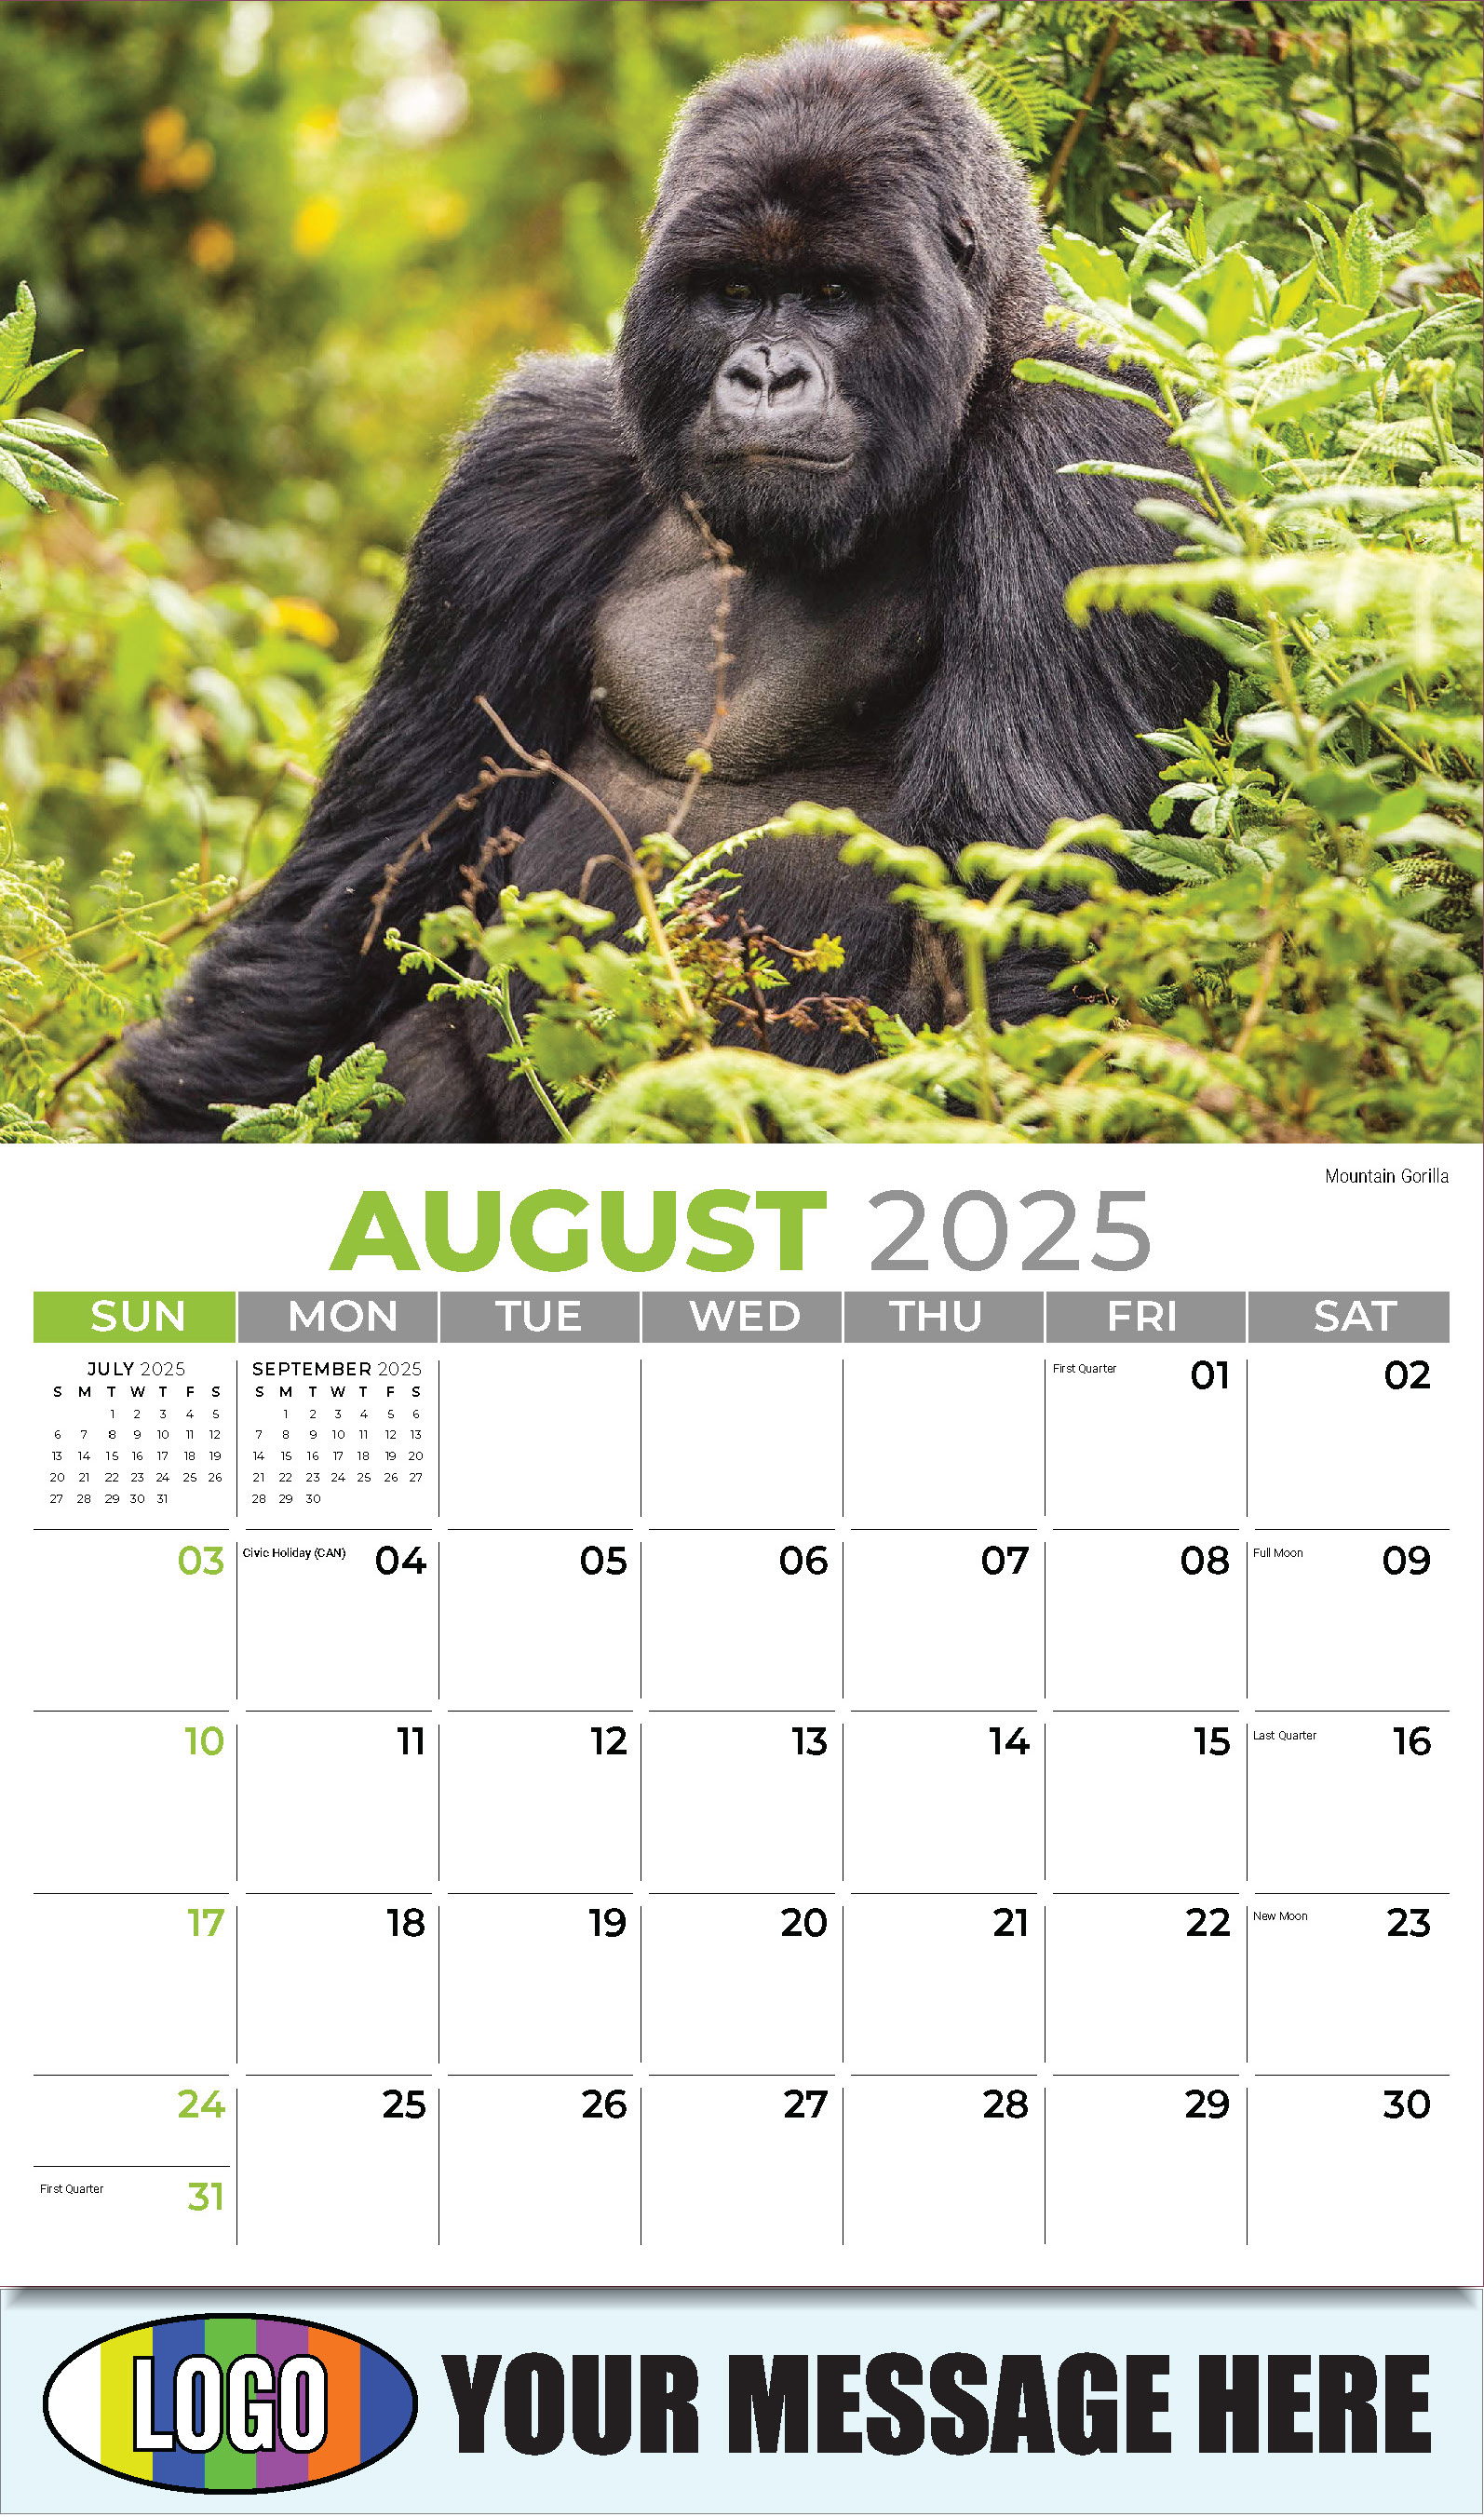 International Wildlife 2025 Business Advertising Wall Calendar - August